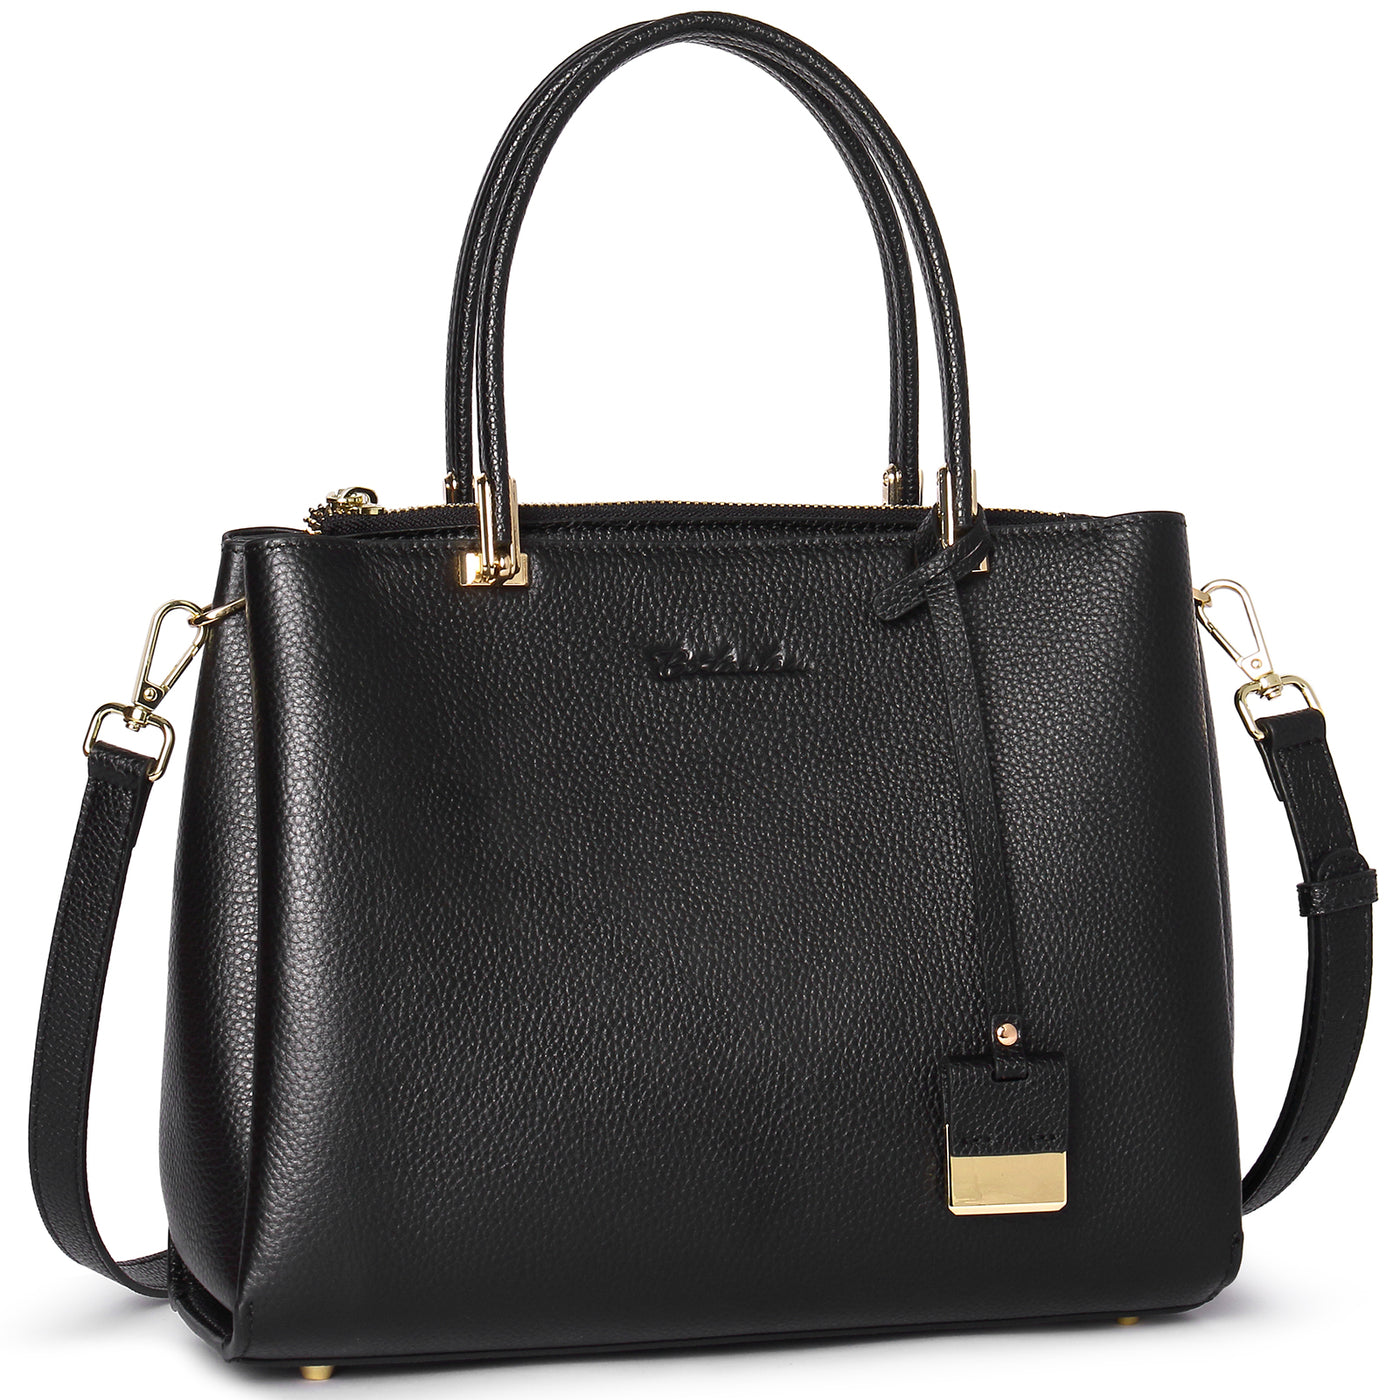 Authentic Coach Top Grade Premium Leather Tote Bag Shoulder Bag for Women